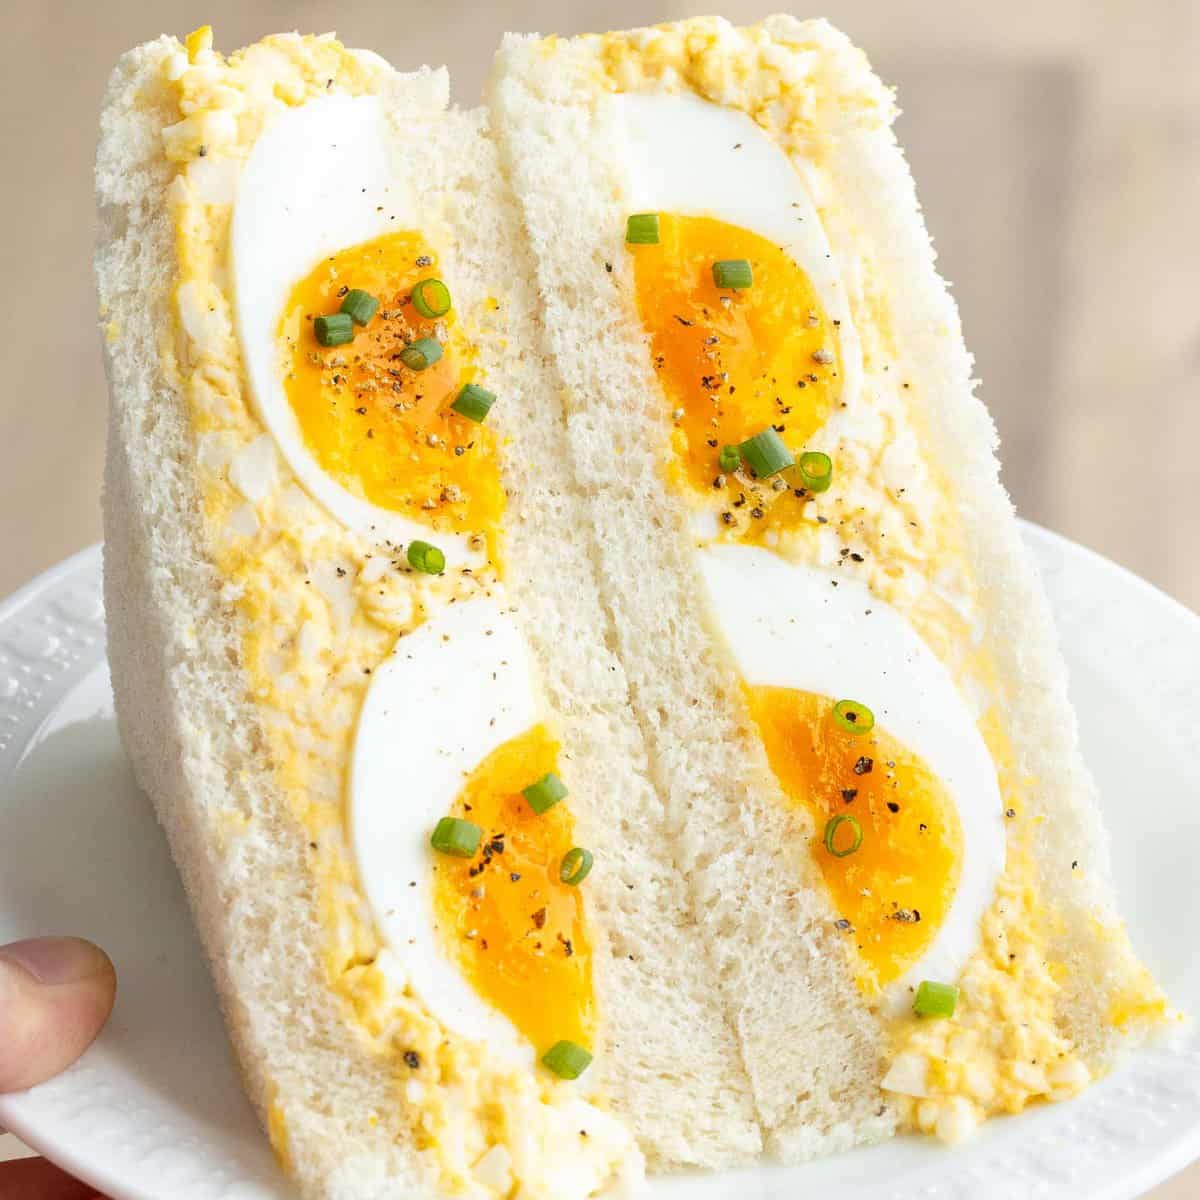 Japanese egg sandwich or tamago sando.